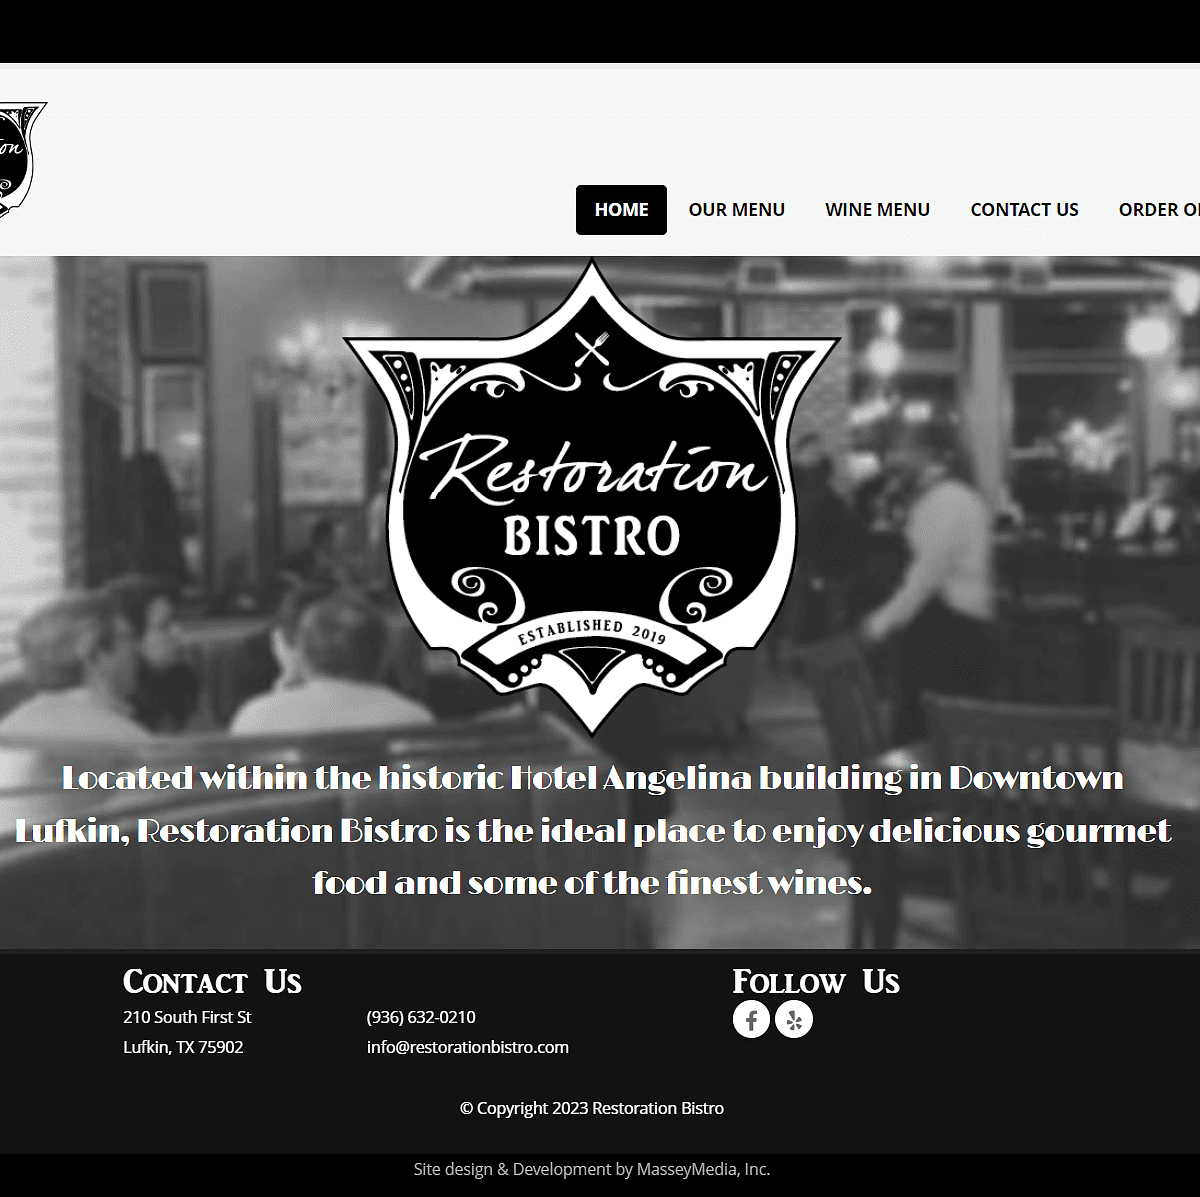 Restoration Bistro Website Design Screenshot - Homepage